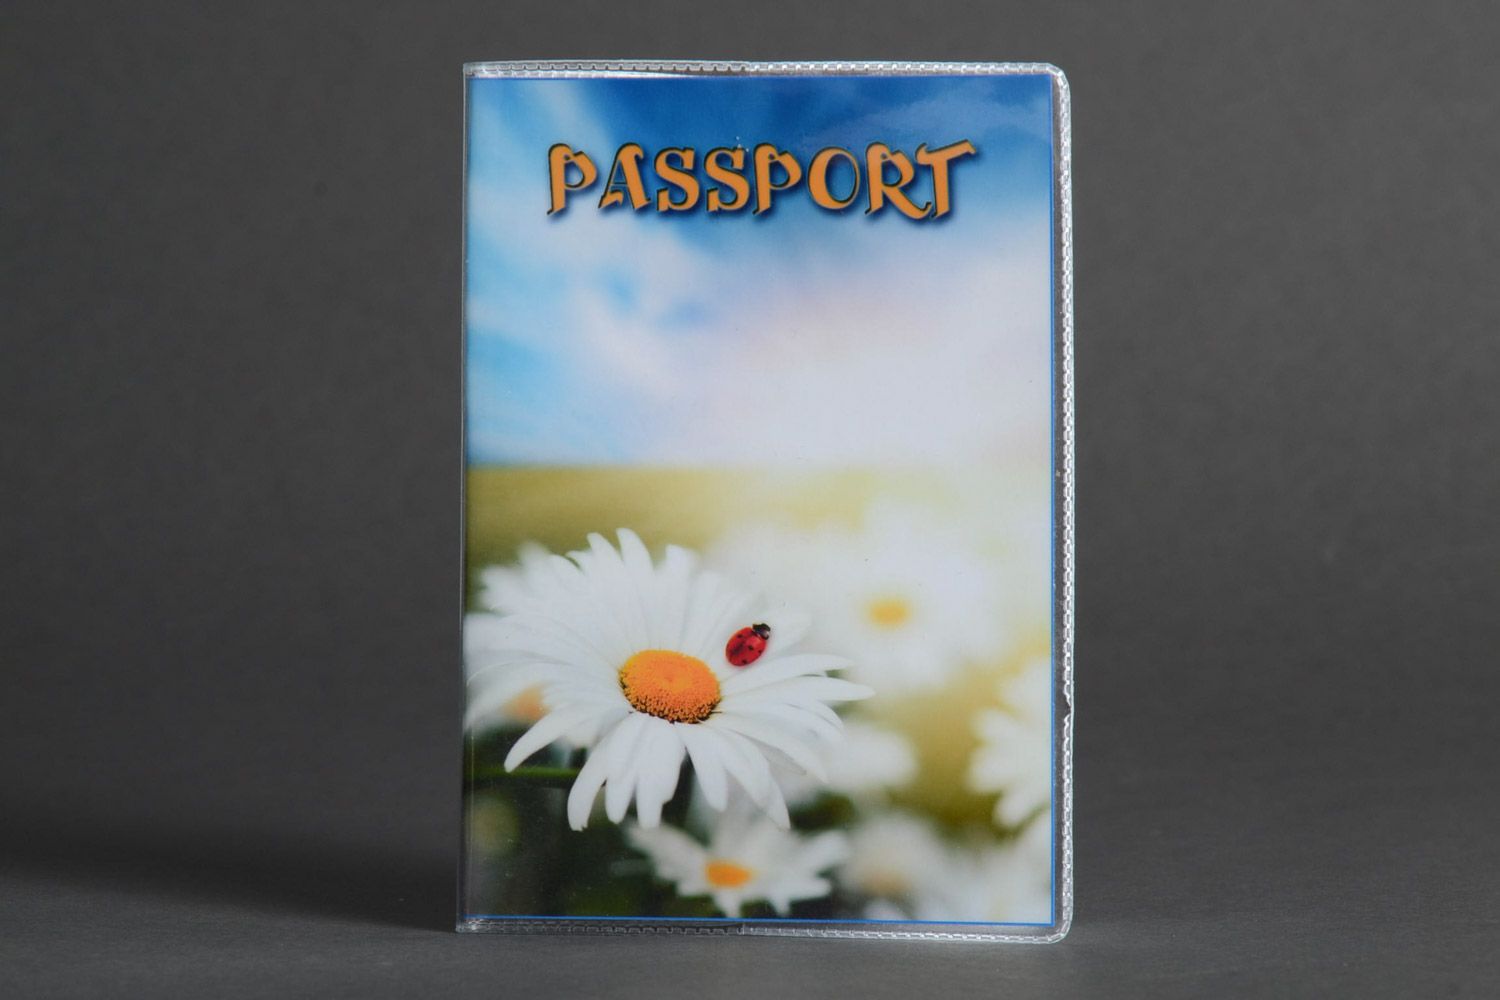 Обложка на паспорт с картинкой пластиковая в технике фотопечати ручная работа фото 1